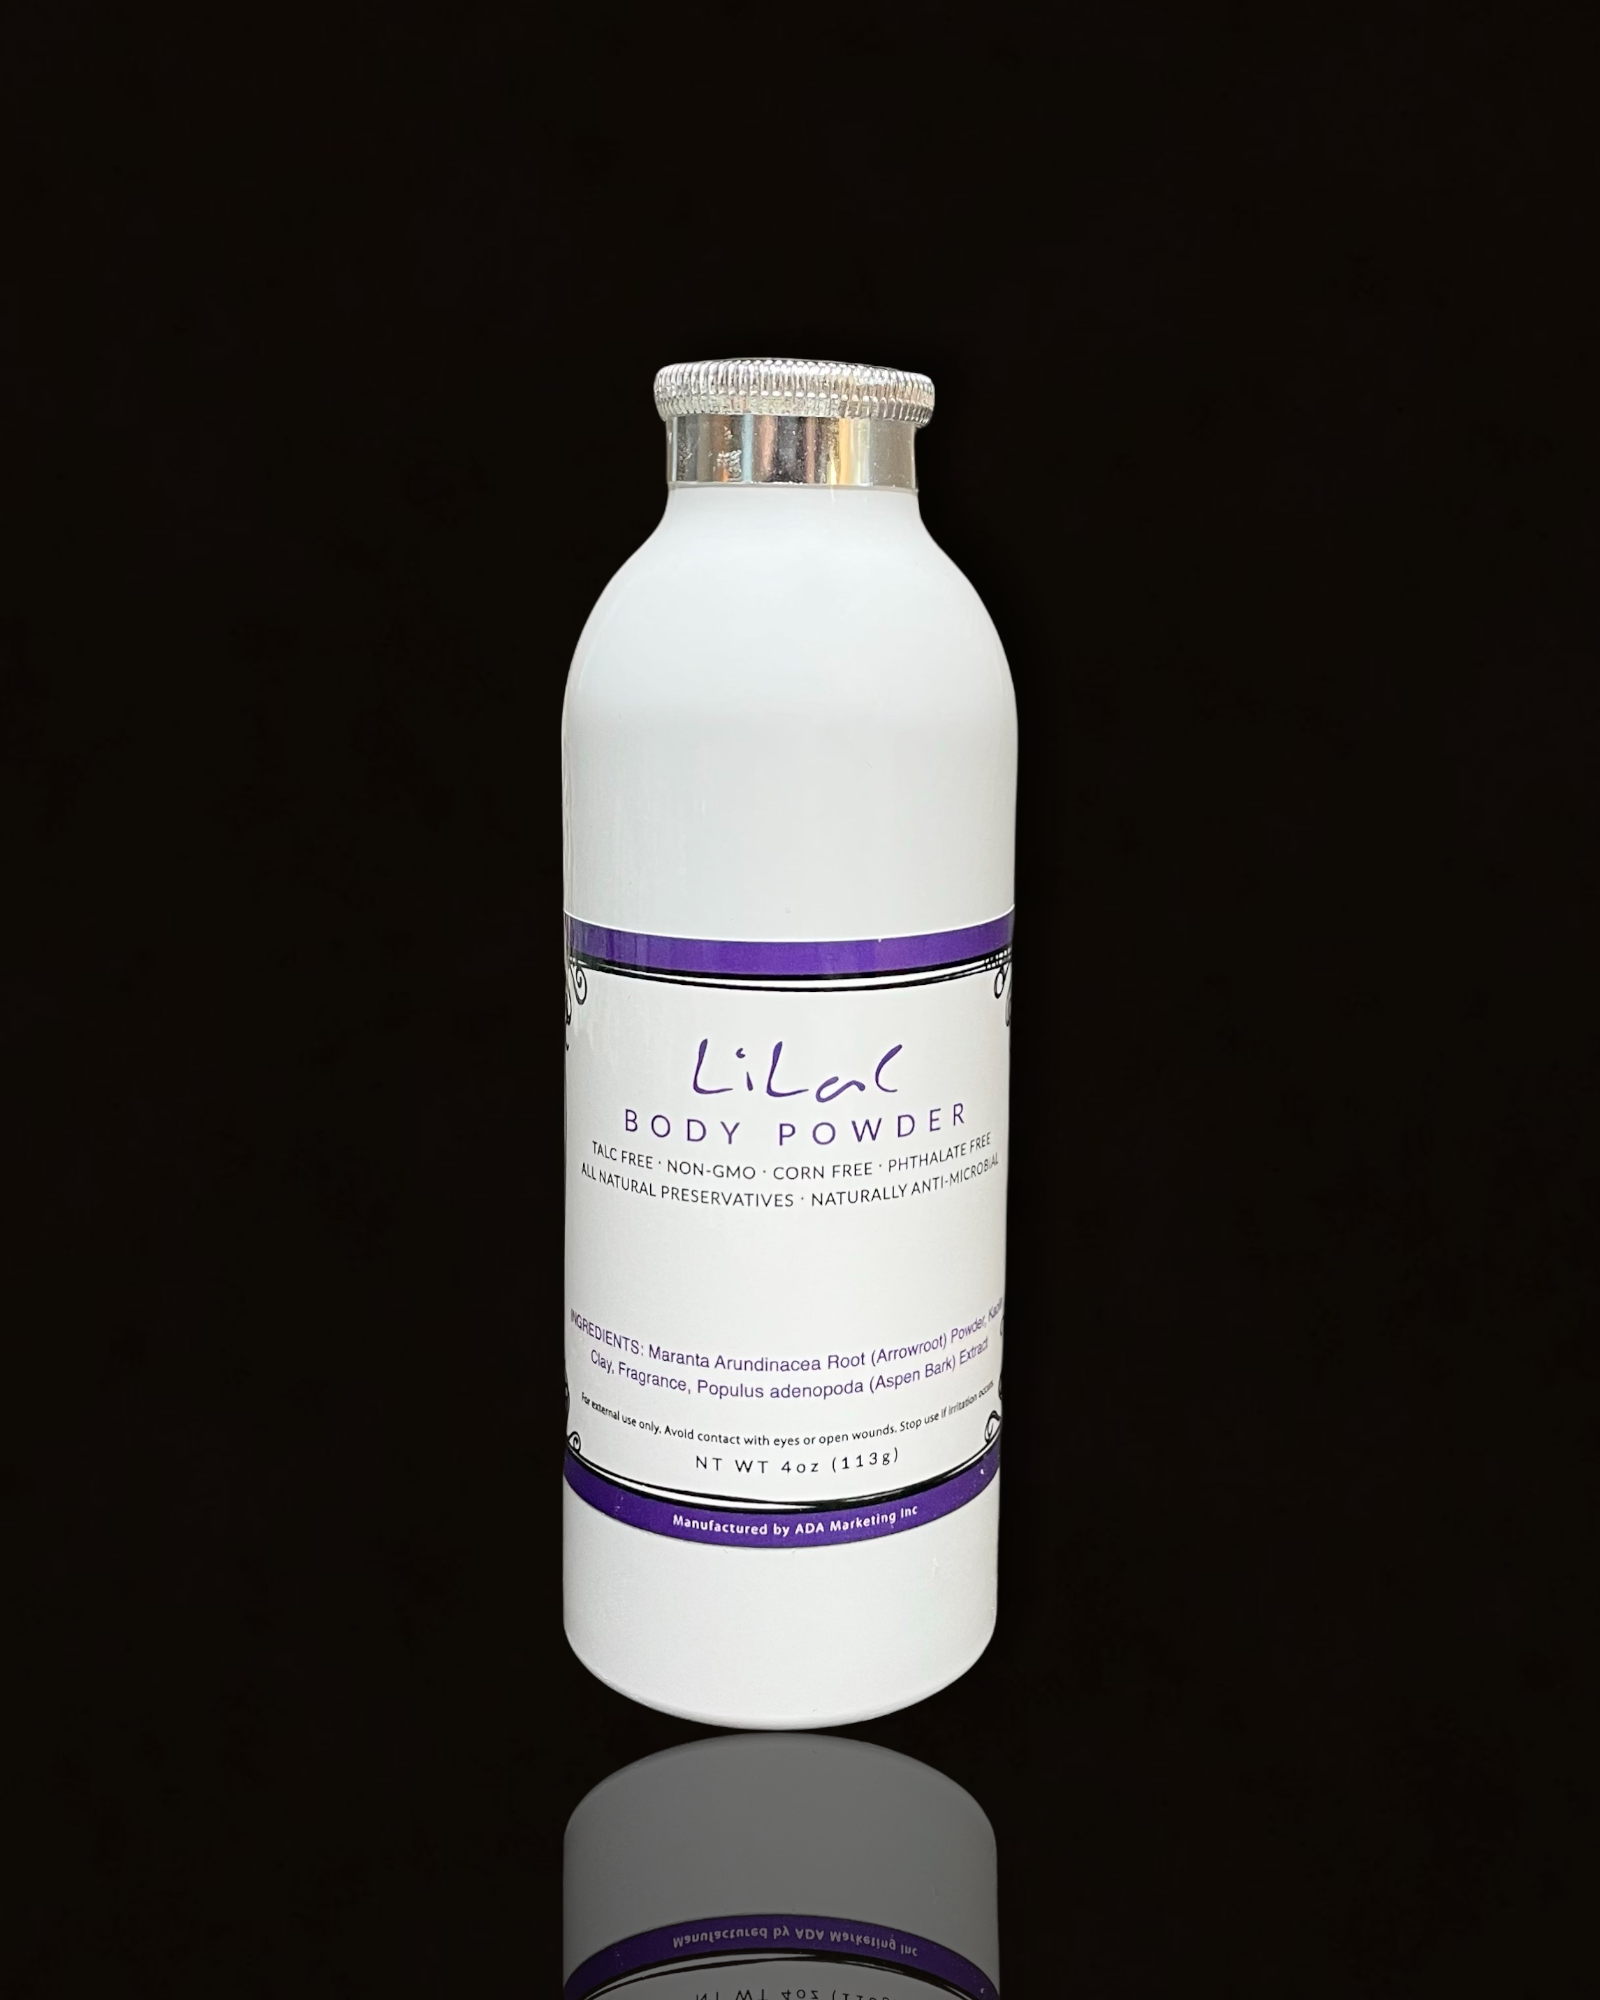 Lilac dusting powder - talc free natural